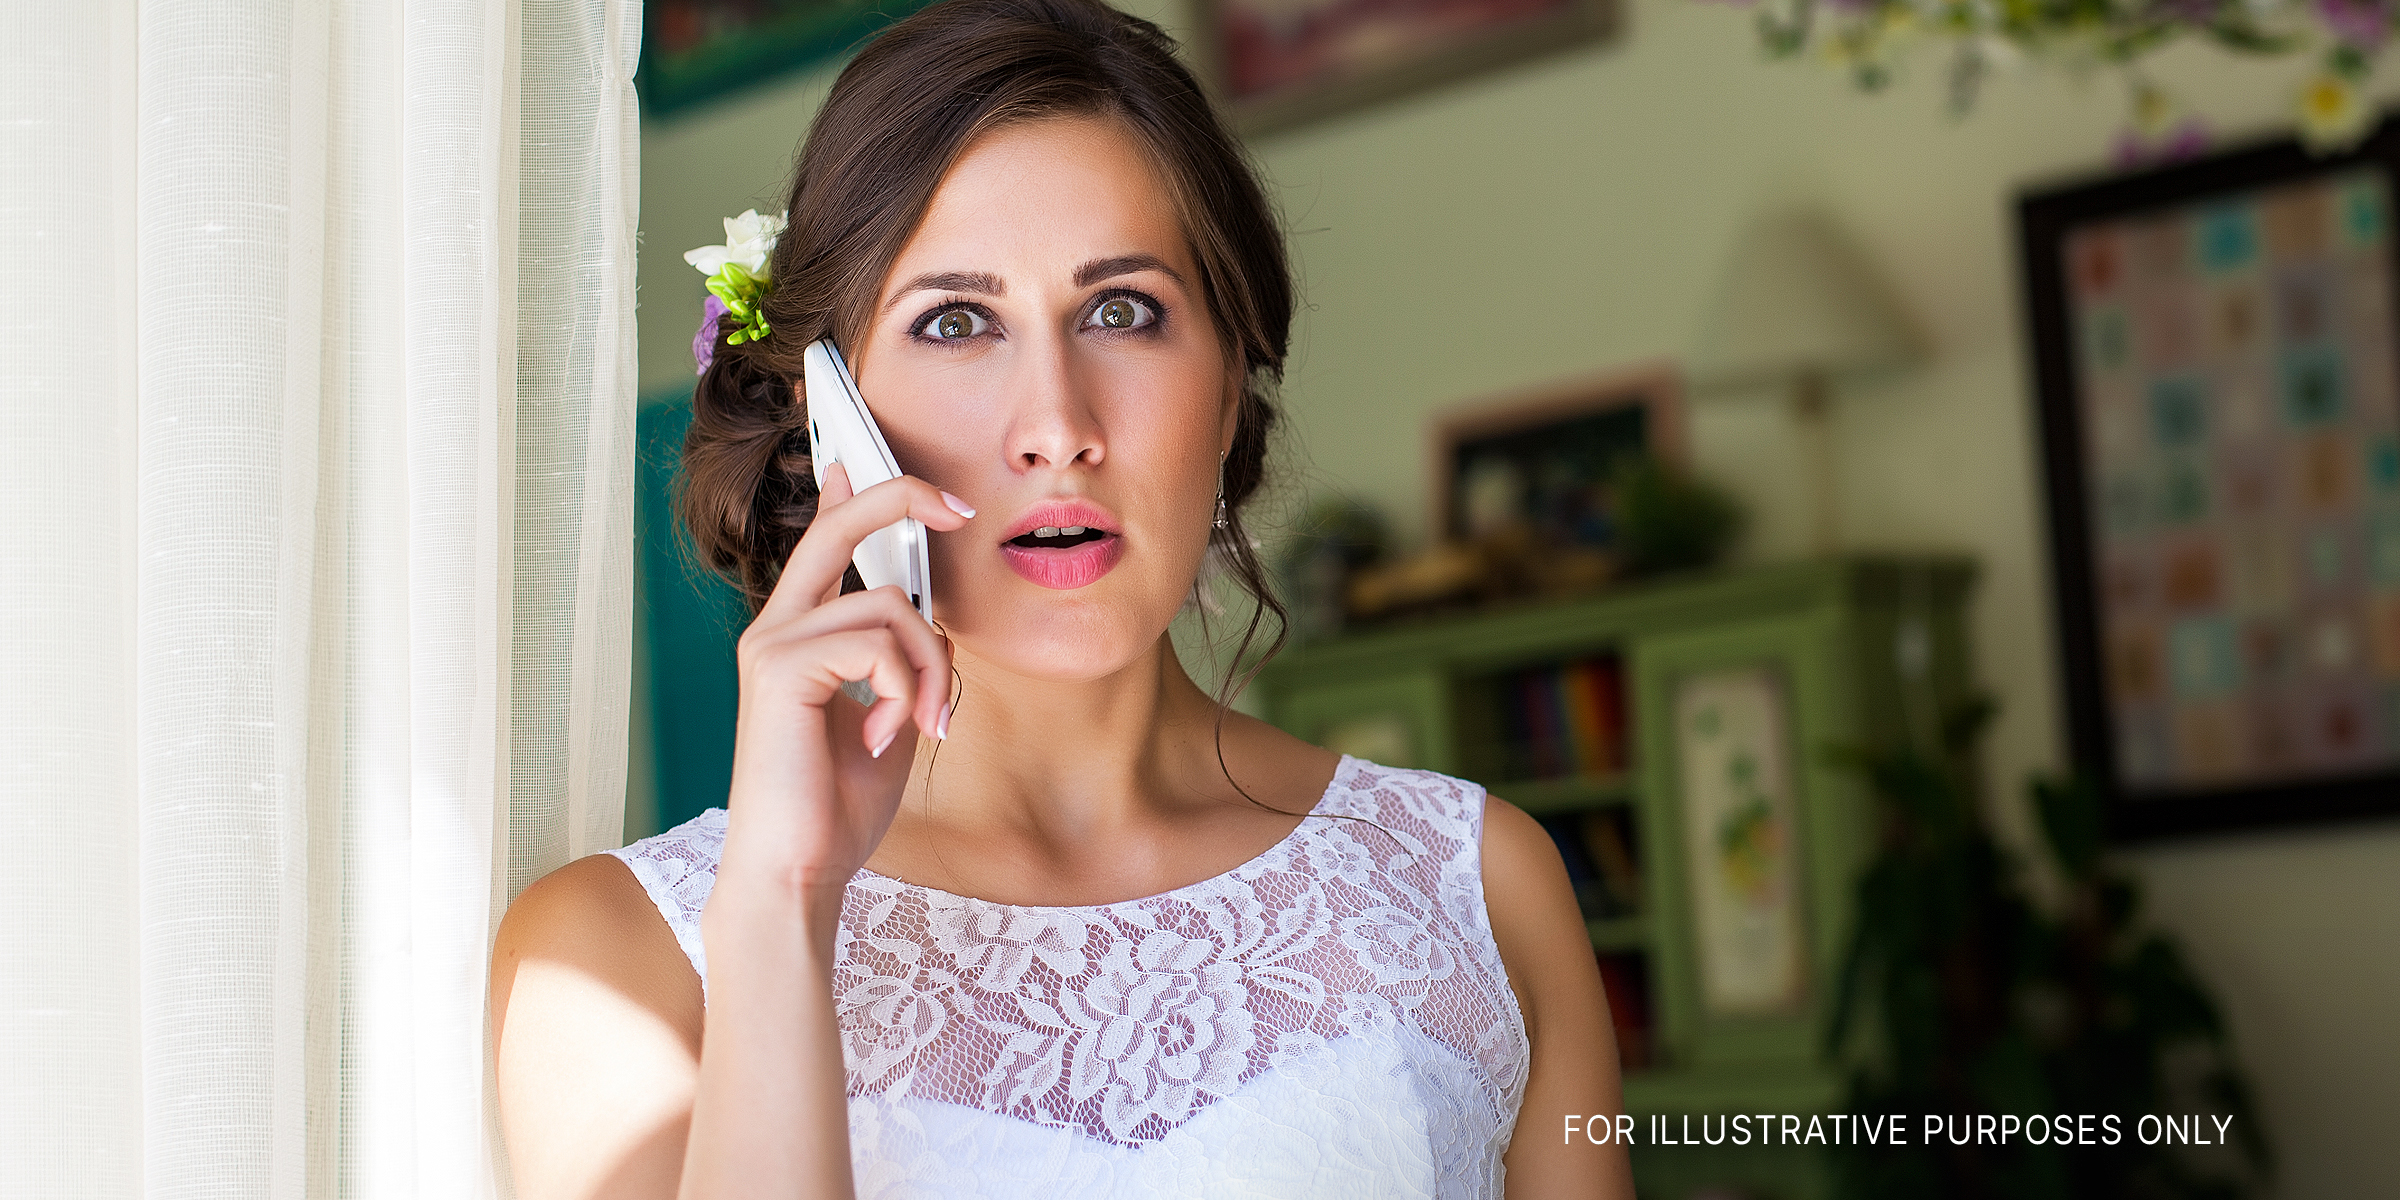 A bride in shock | Source: Shutterstock